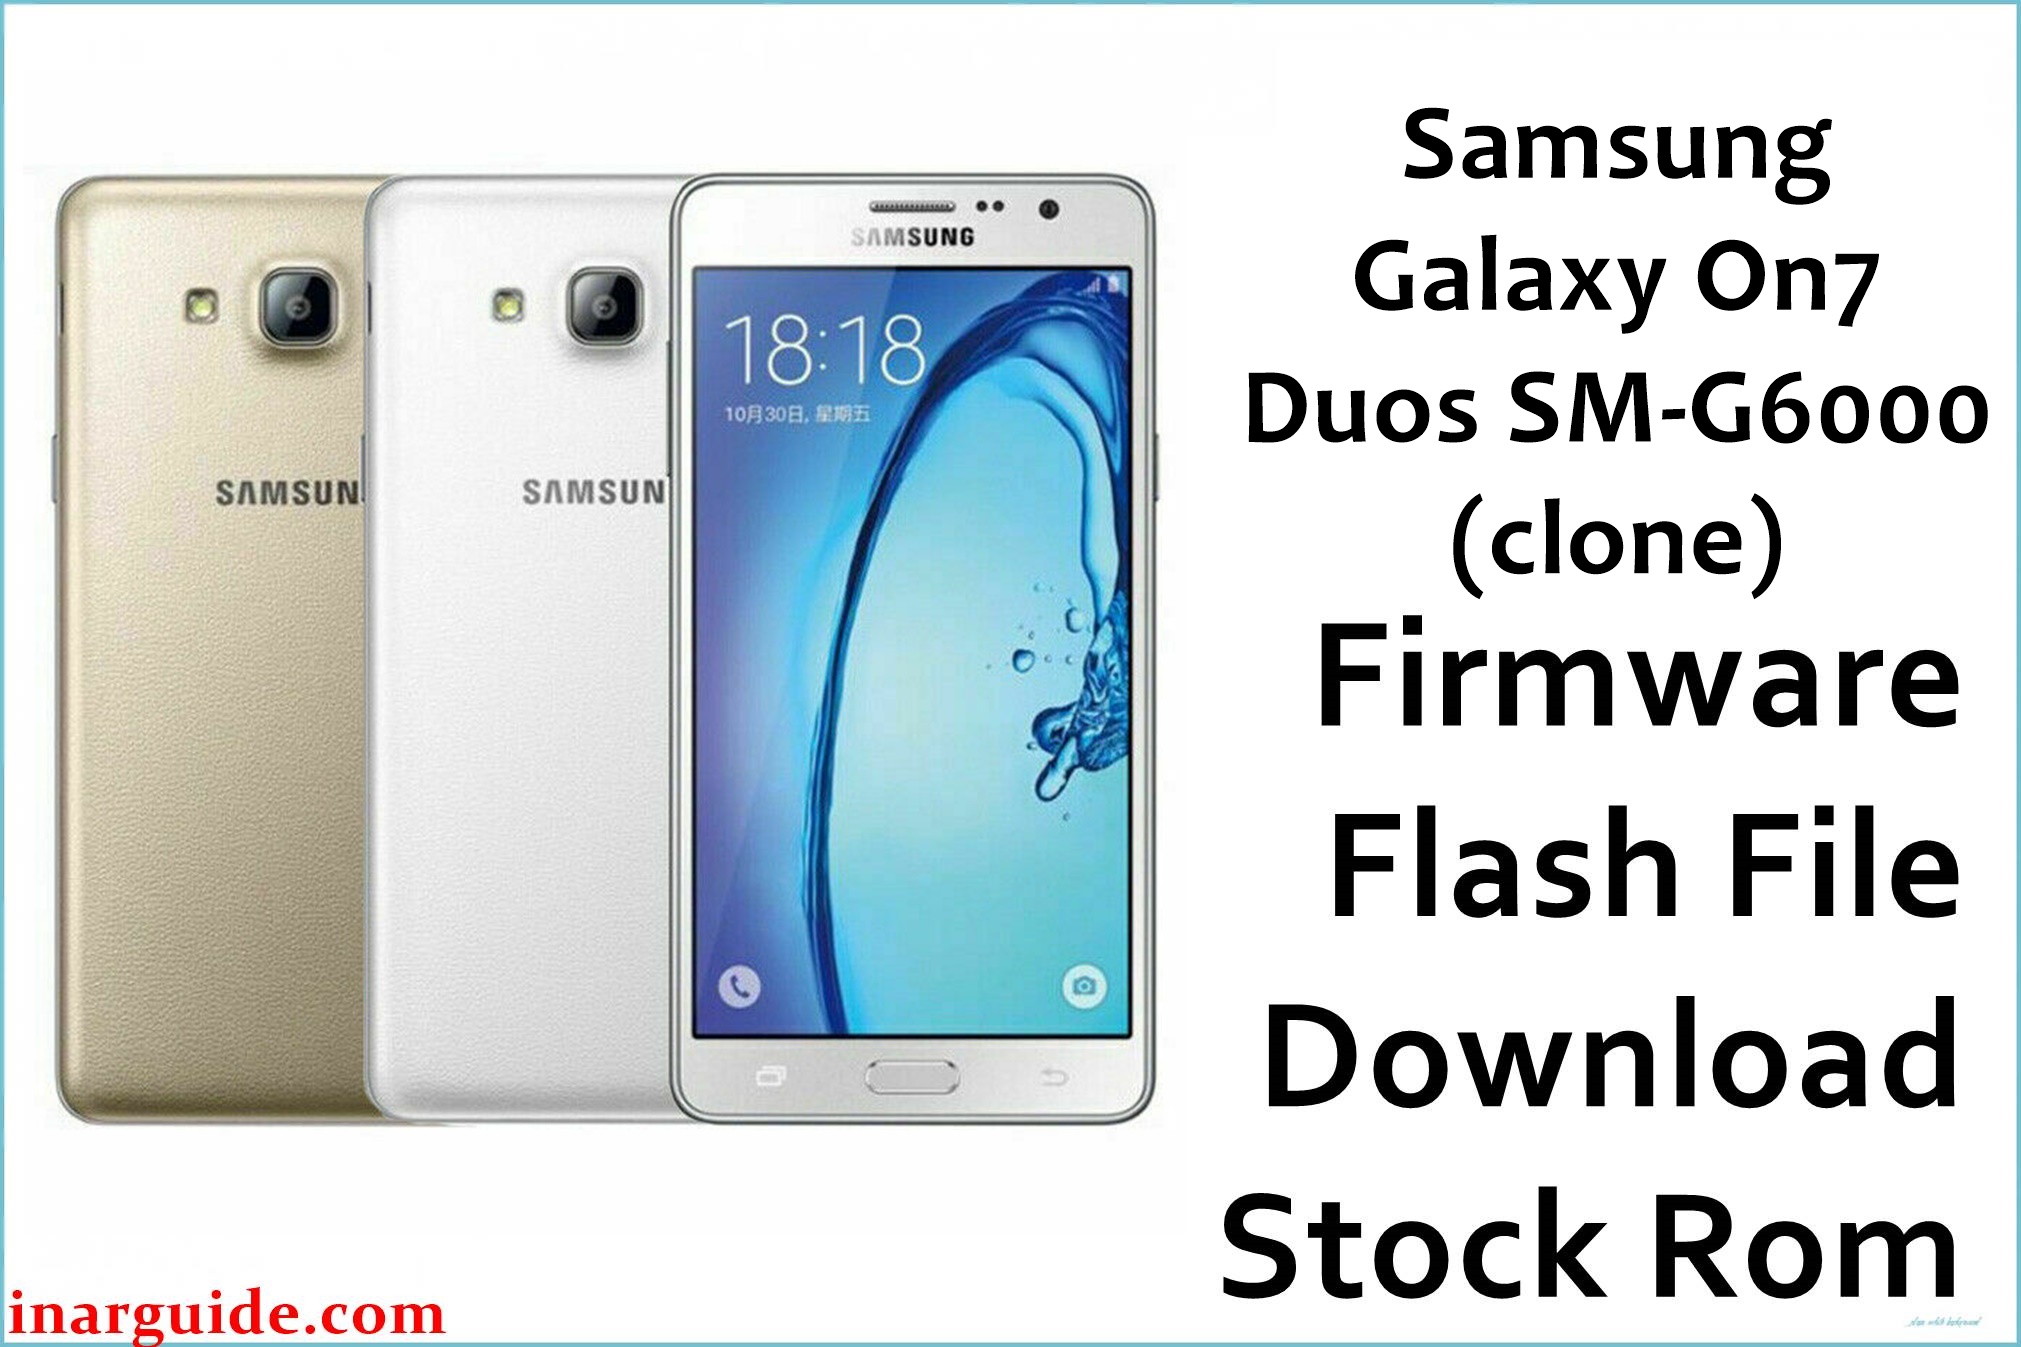 Samsung Galaxy On7 Duos SM G6000 clone